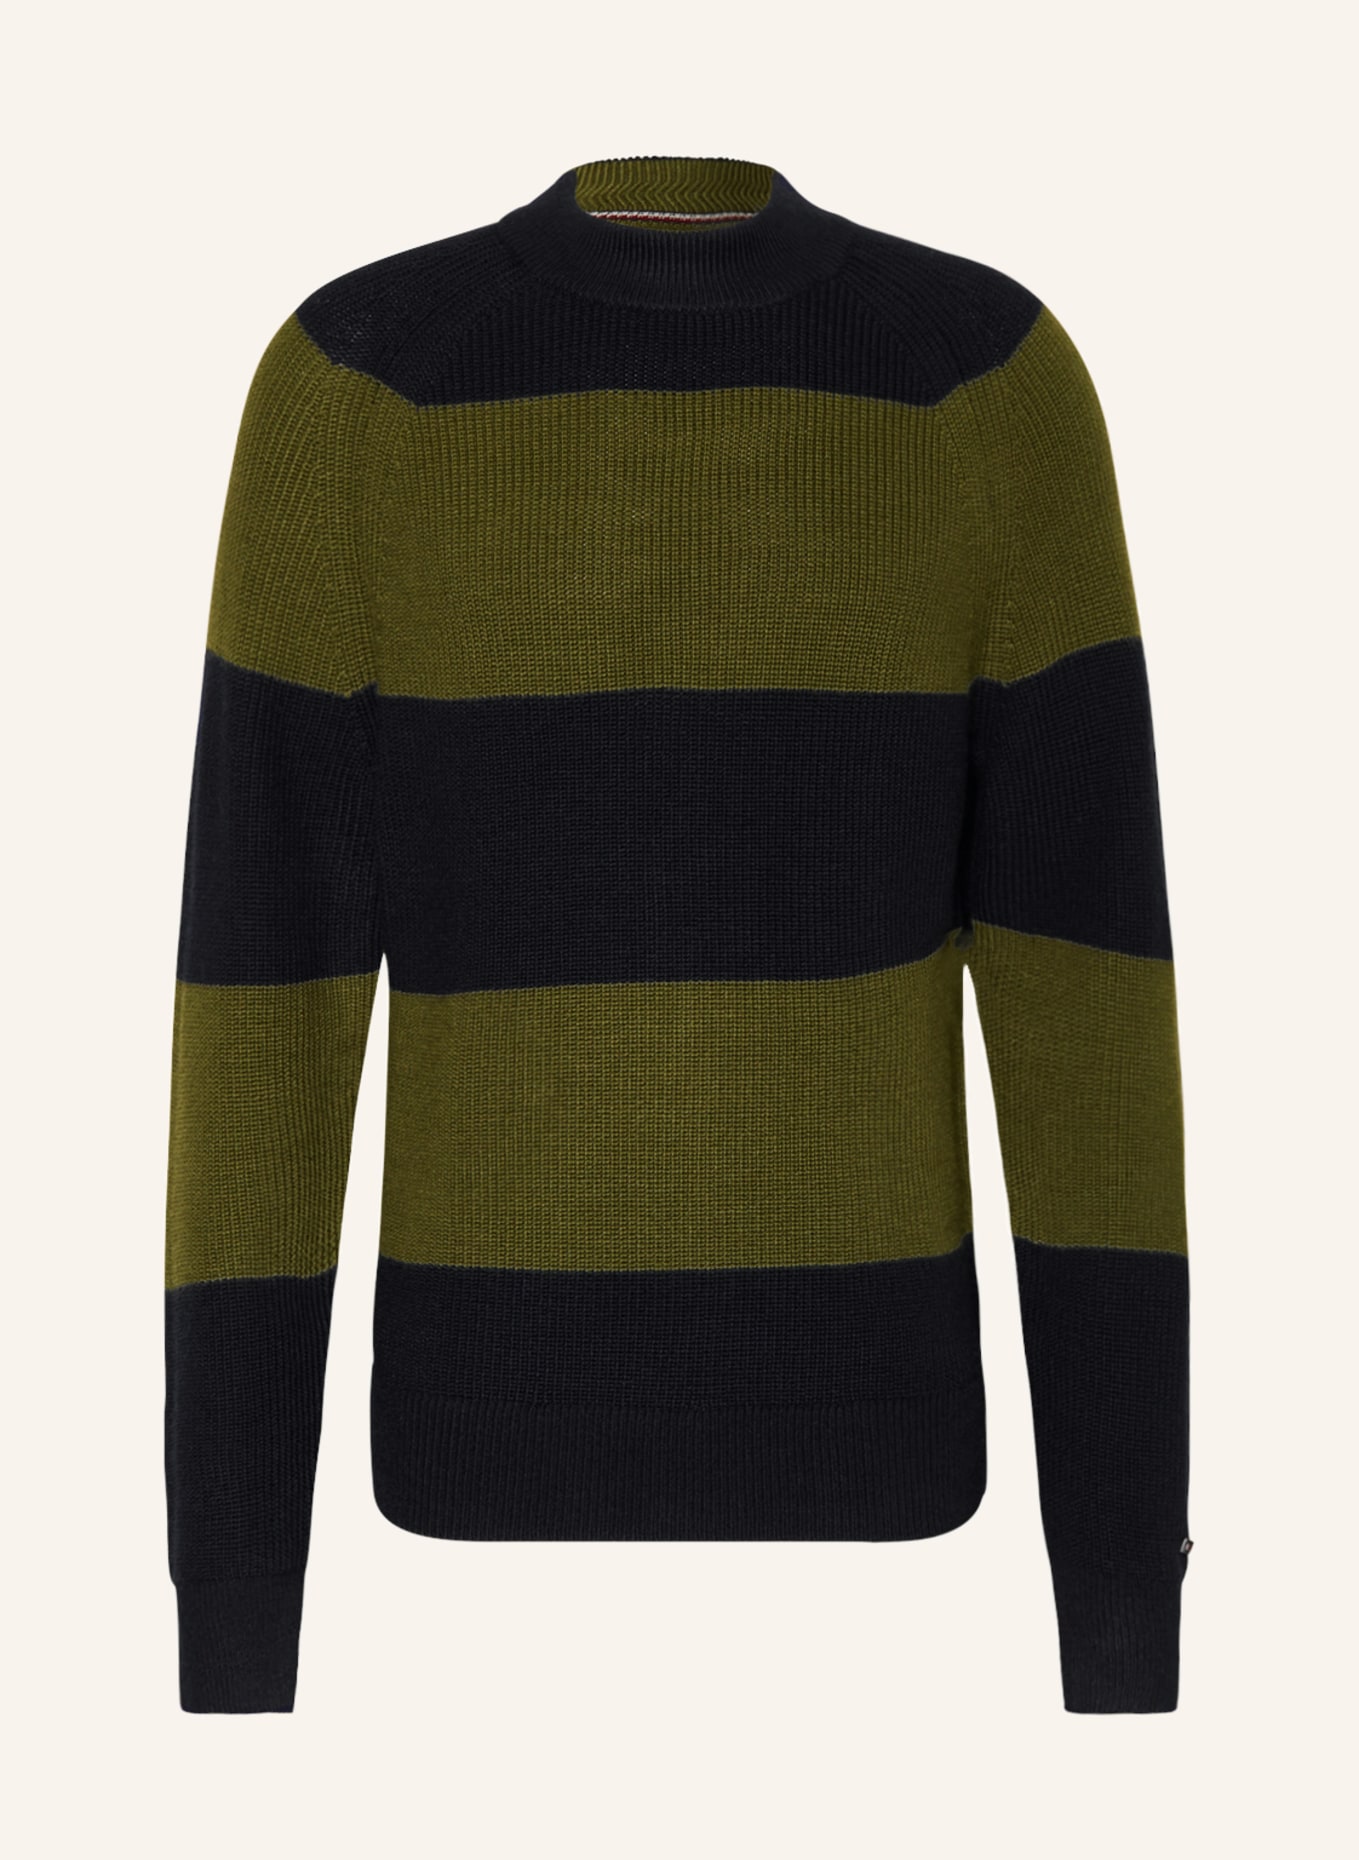 TOMMY HILFIGER Pullover, Farbe: DUNKELBLAU/ DUNKELGRÜN (Bild 1)